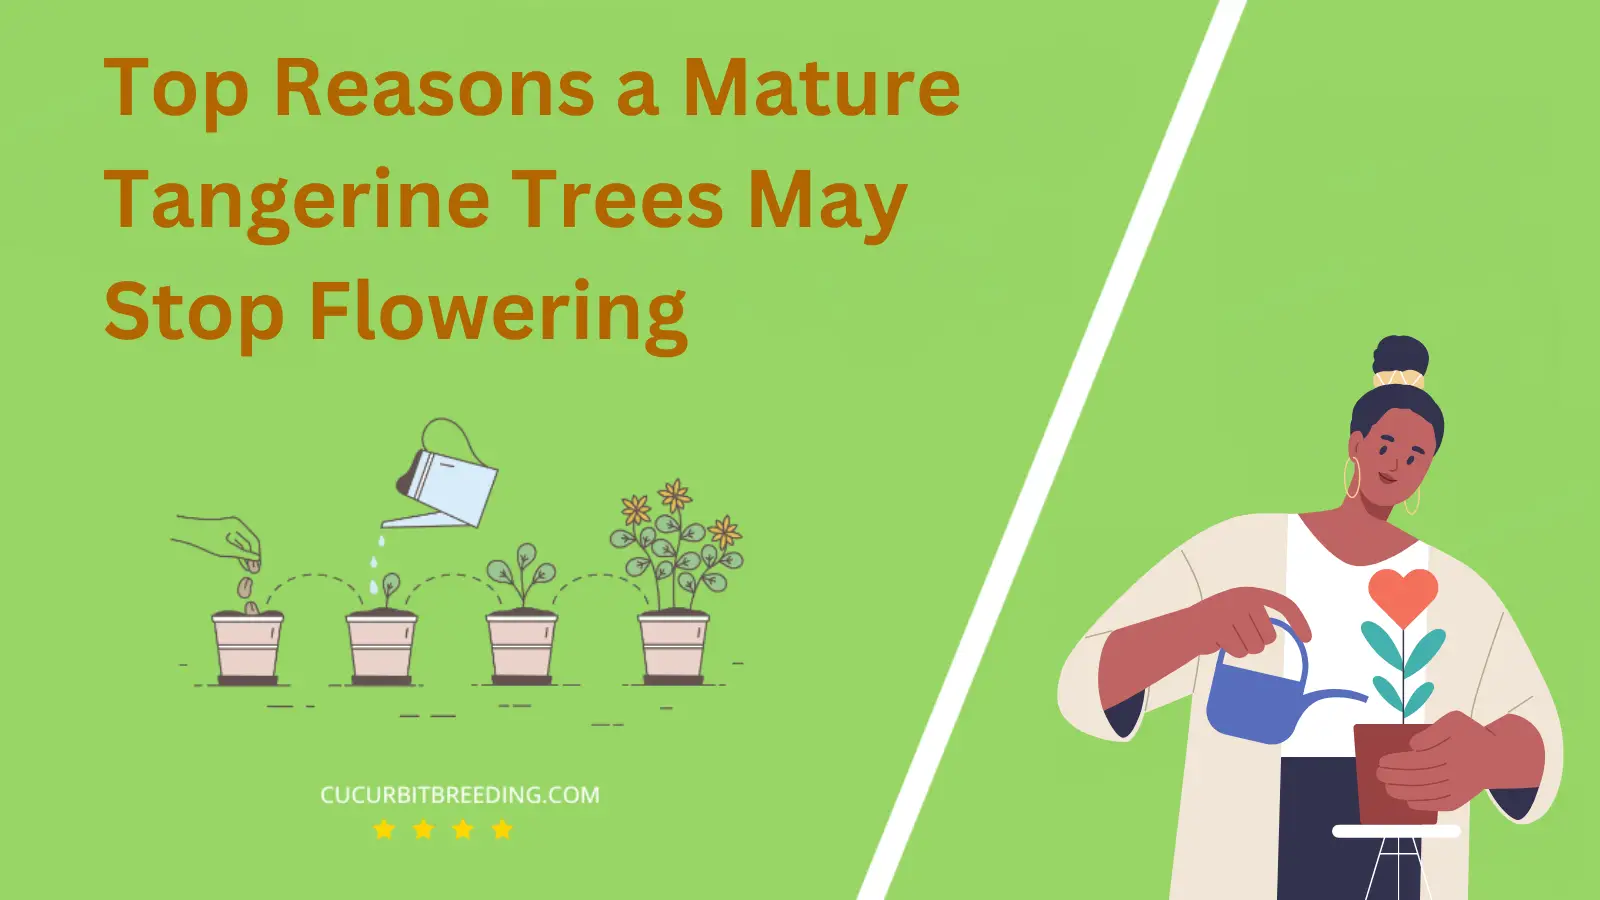 Top Reasons a Mature Tangerine Trees May Stop Flowering